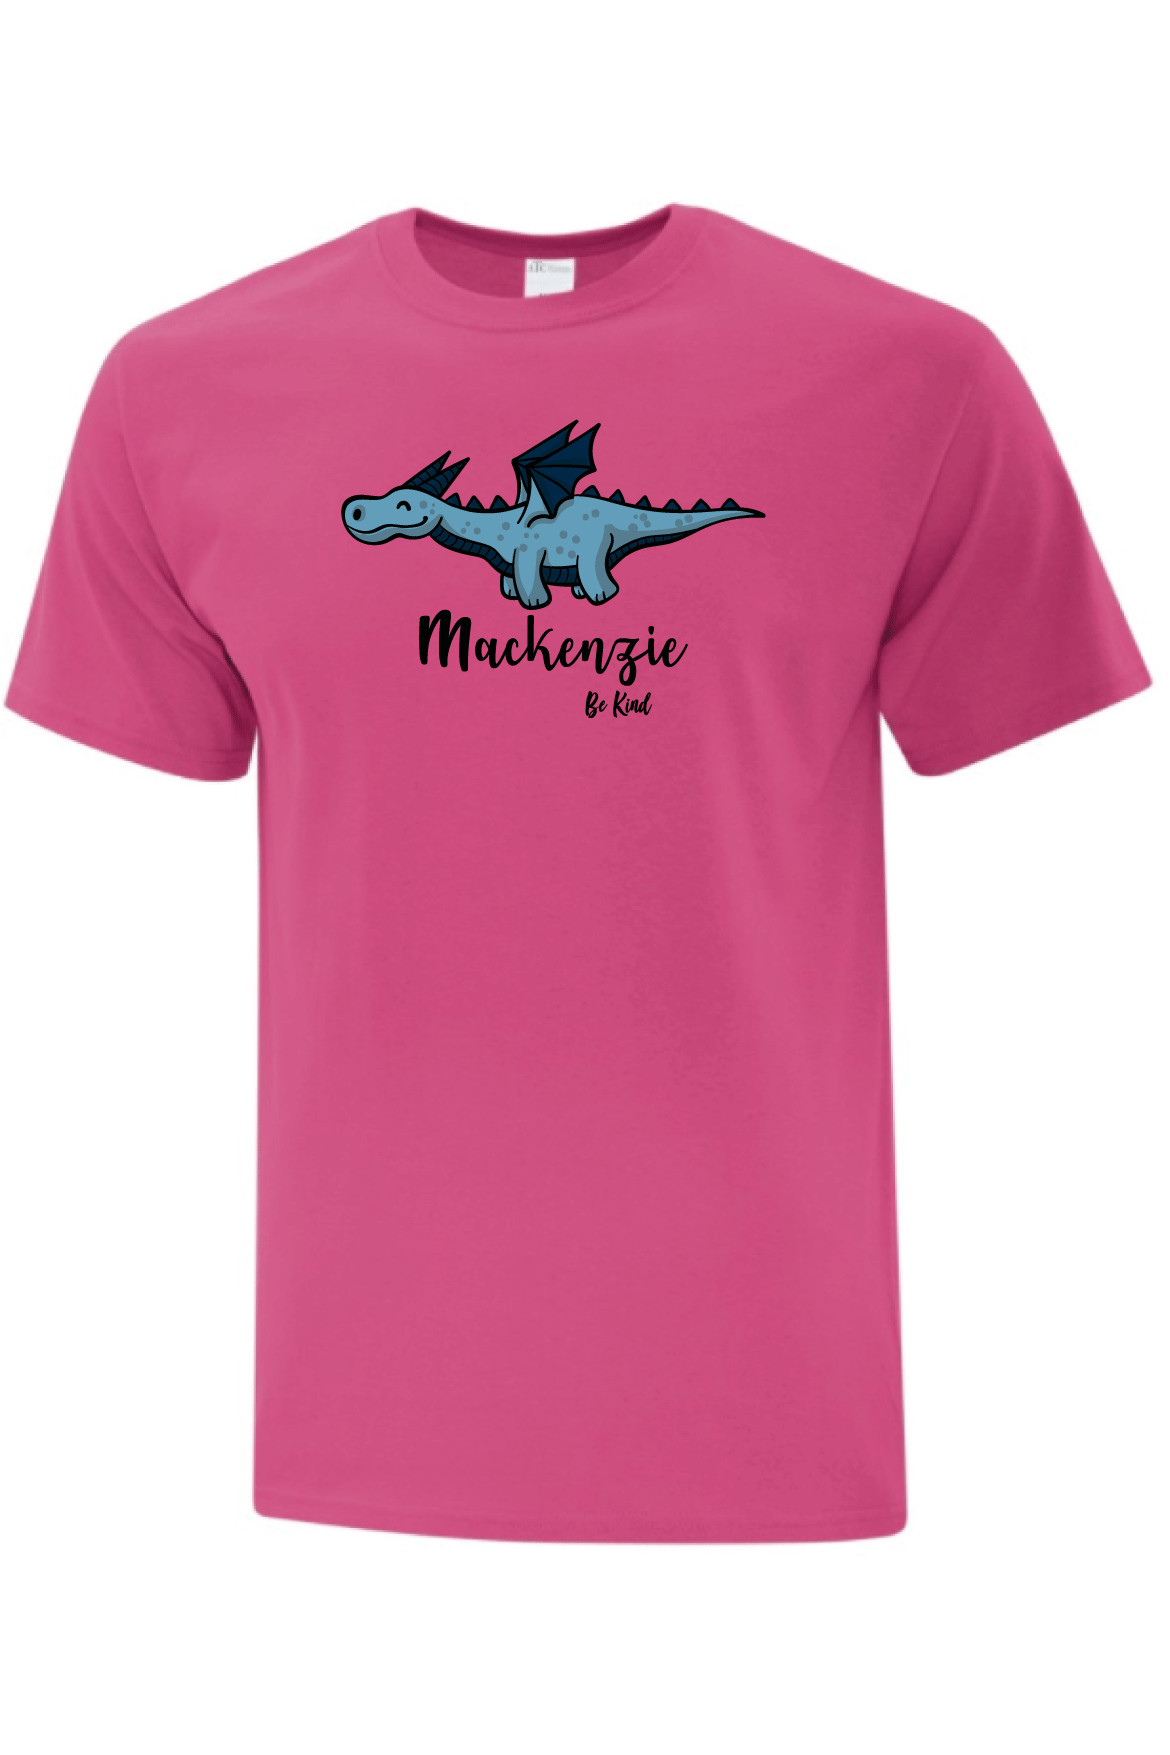 Mackenzie Adult T-Shirt (Be Kind Logo) - Oddball Workshop